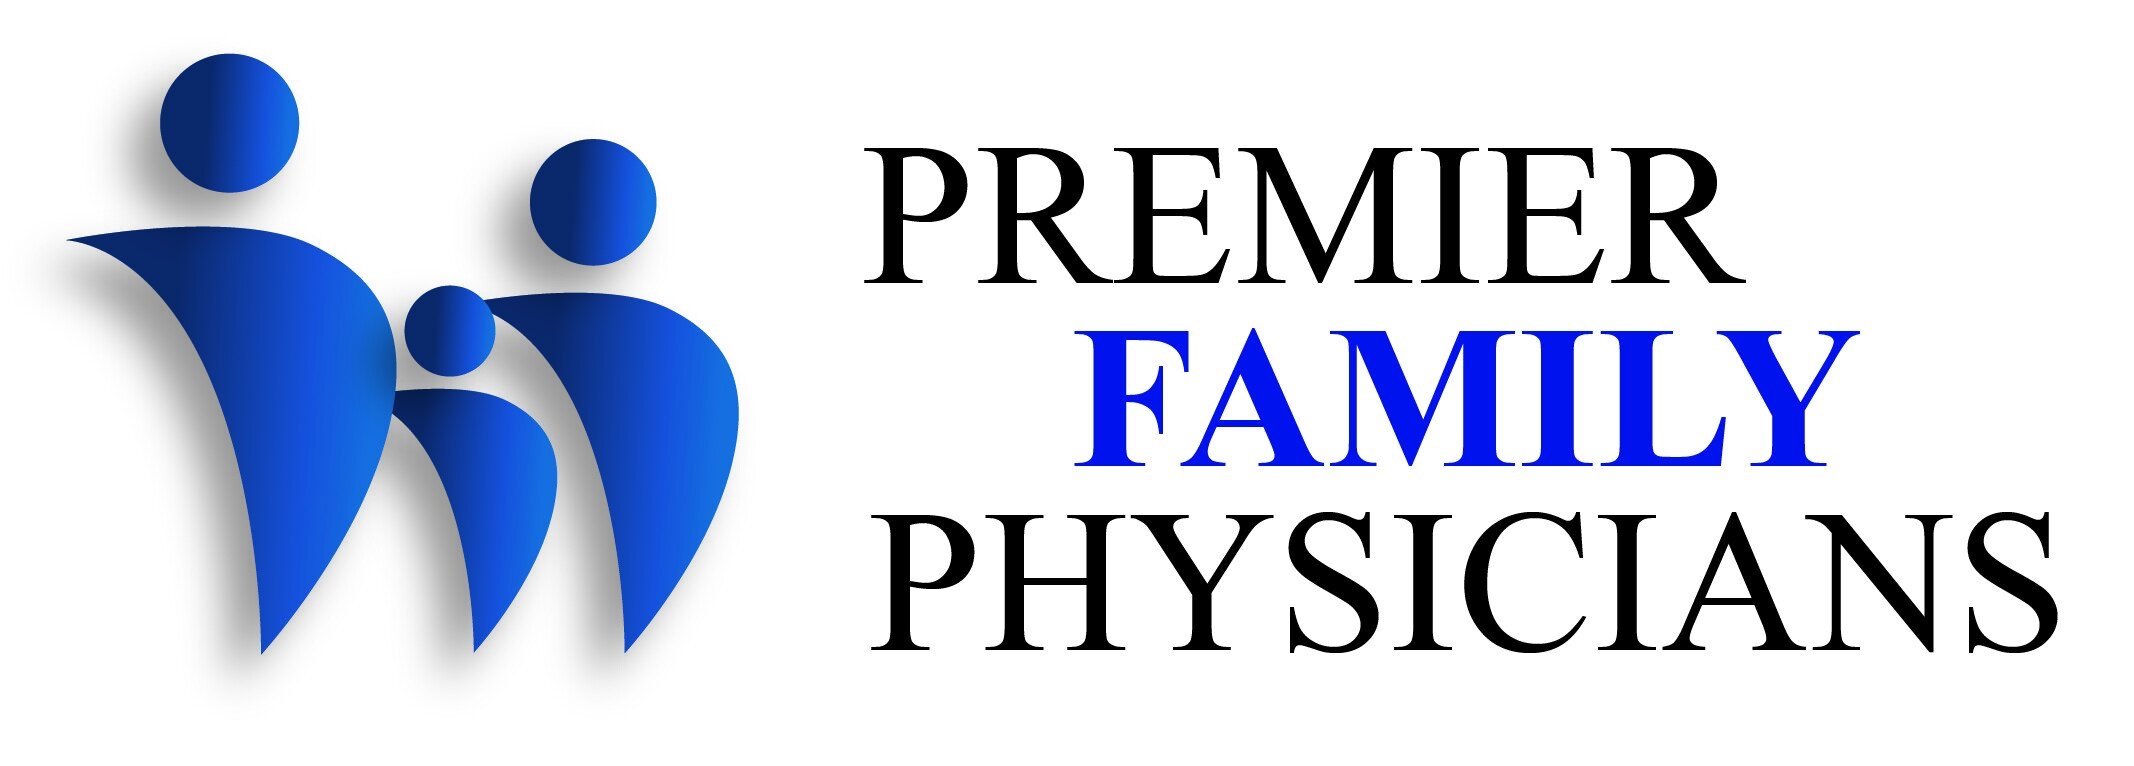 Premier Family Physicians logo